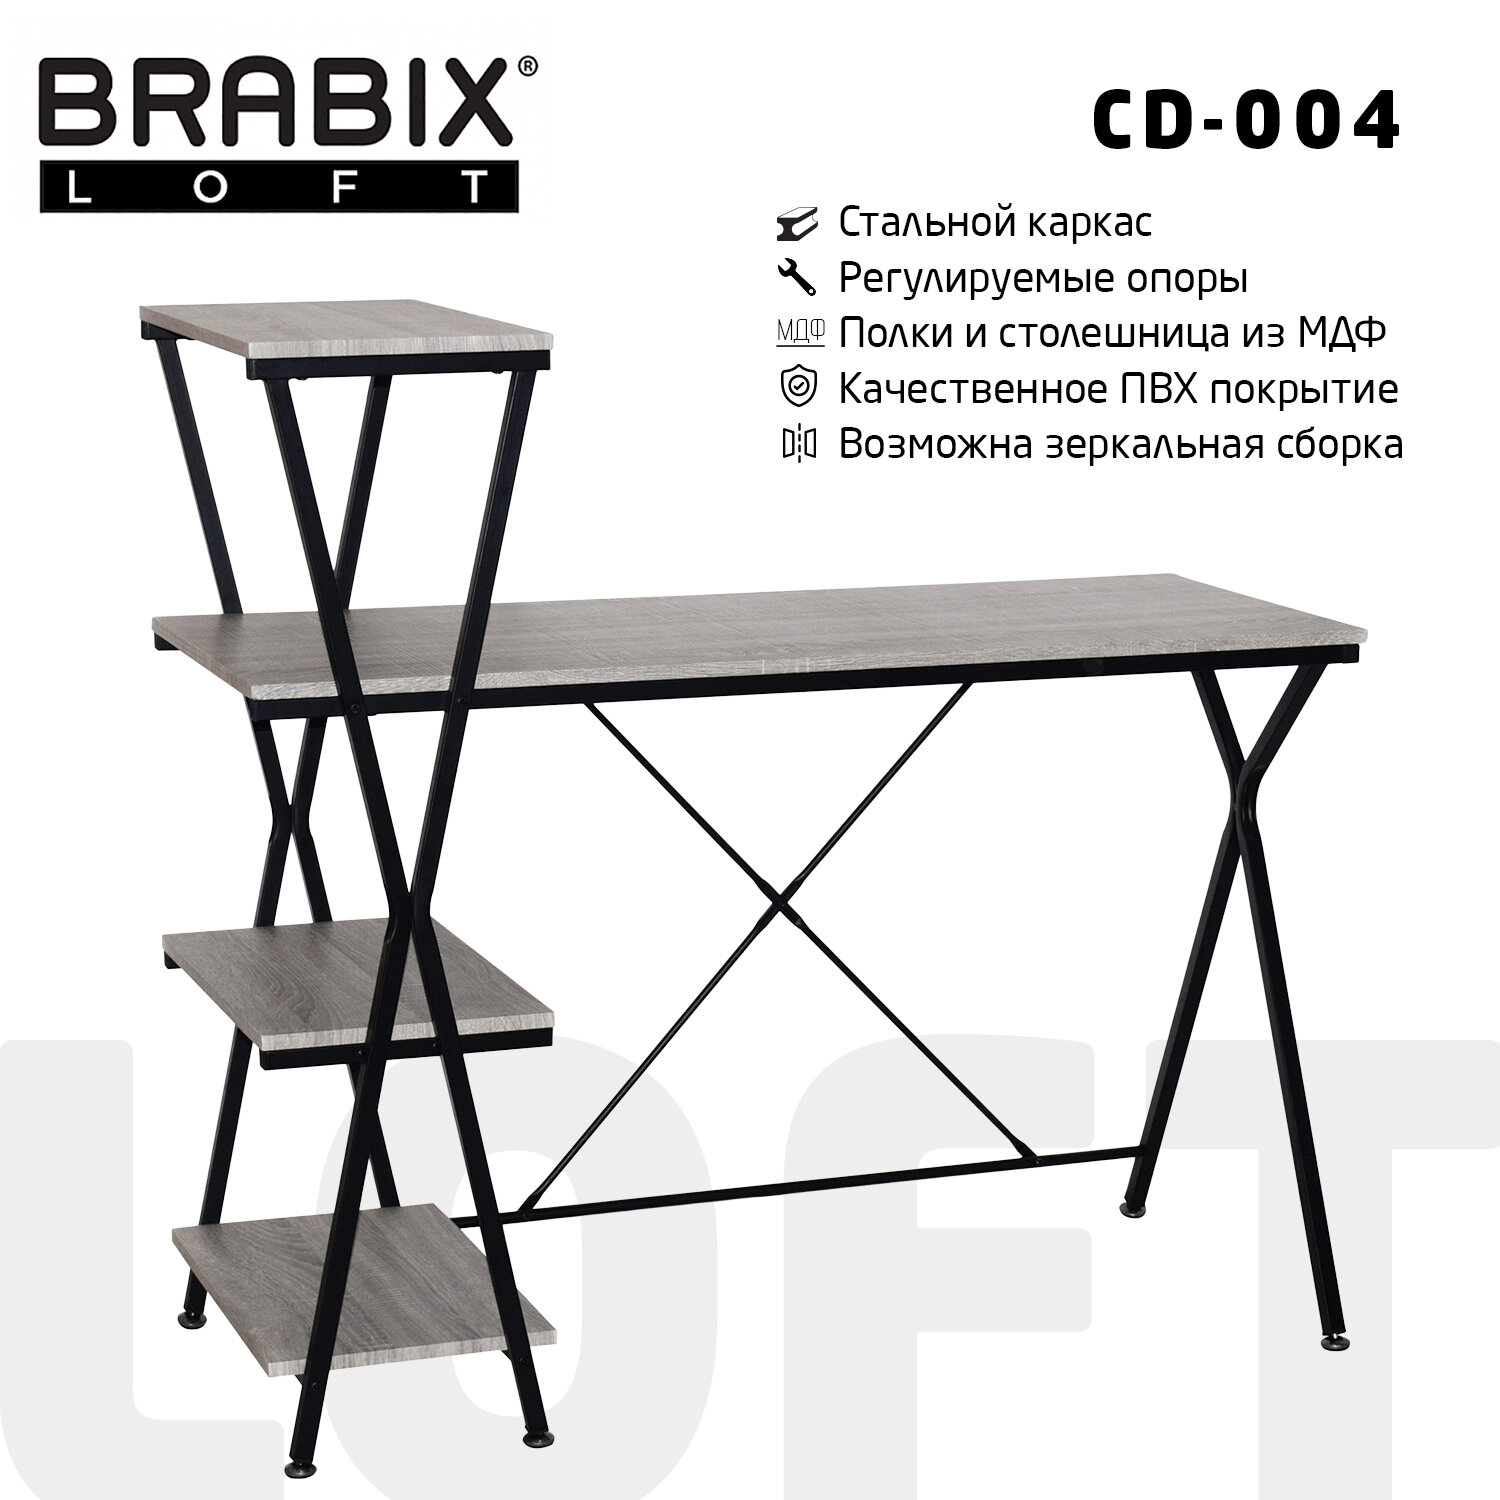 Brabix Стол на металлокаркасе BRABIX LOFT CD-004, 1200х535х1110 мм, 3 полки, цвет дуб антик, 641219